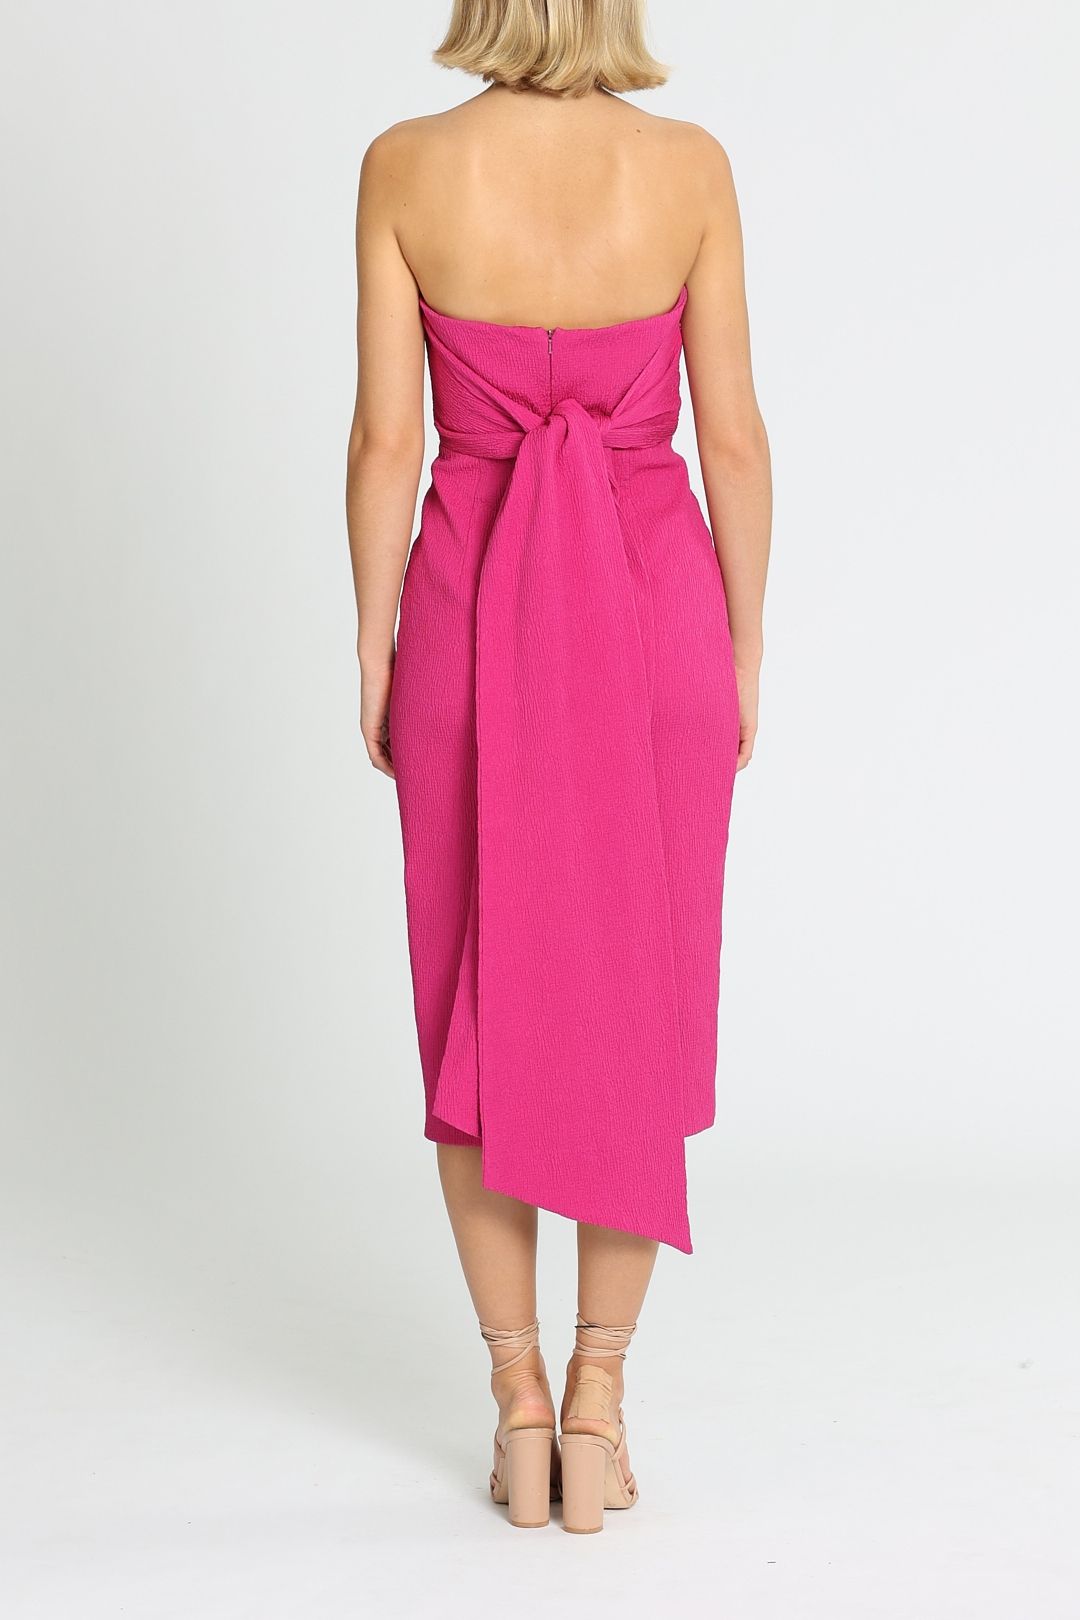 Rebecca Vallance Andie Tie Dress Pink